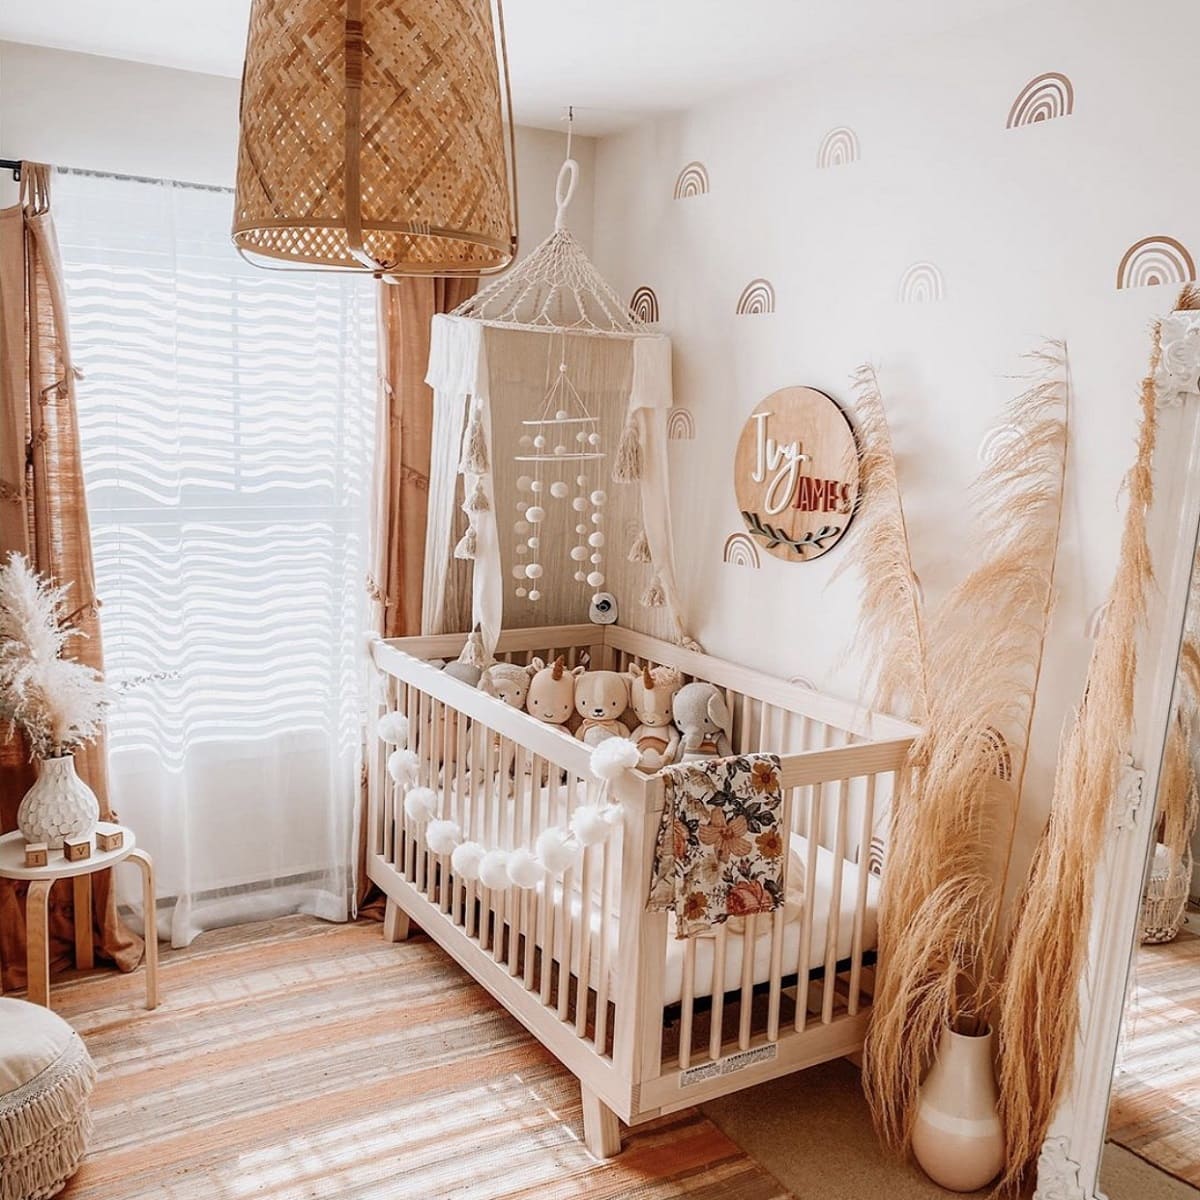 Neutral DIY Nursery Decor for an Easy Baby Room - Start at Home Decor